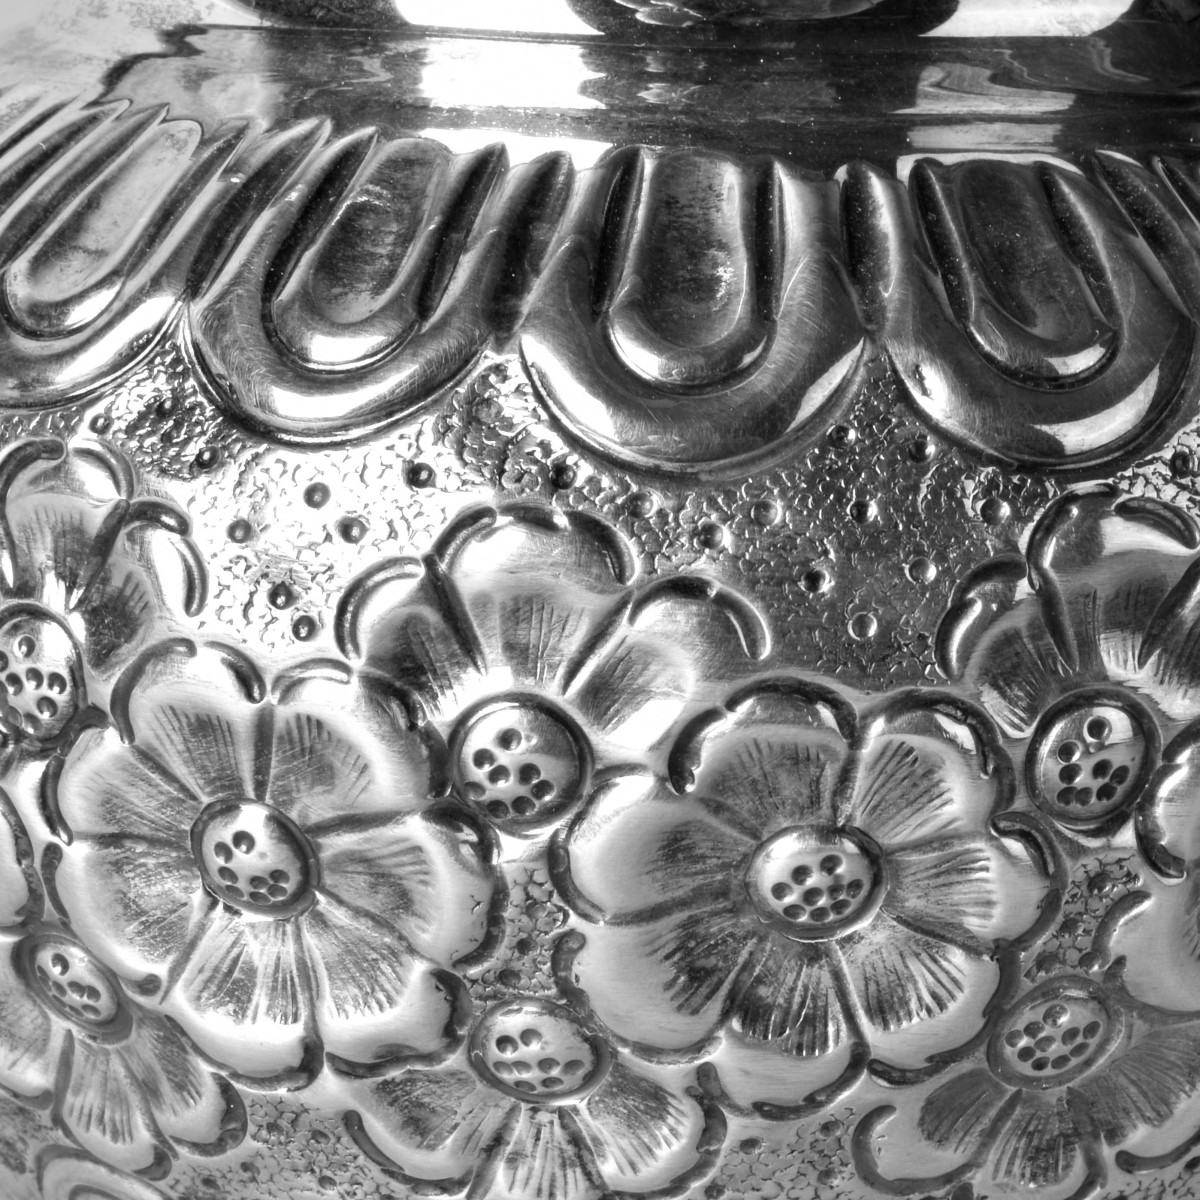 Vintage Turkish 900 Silver Vase